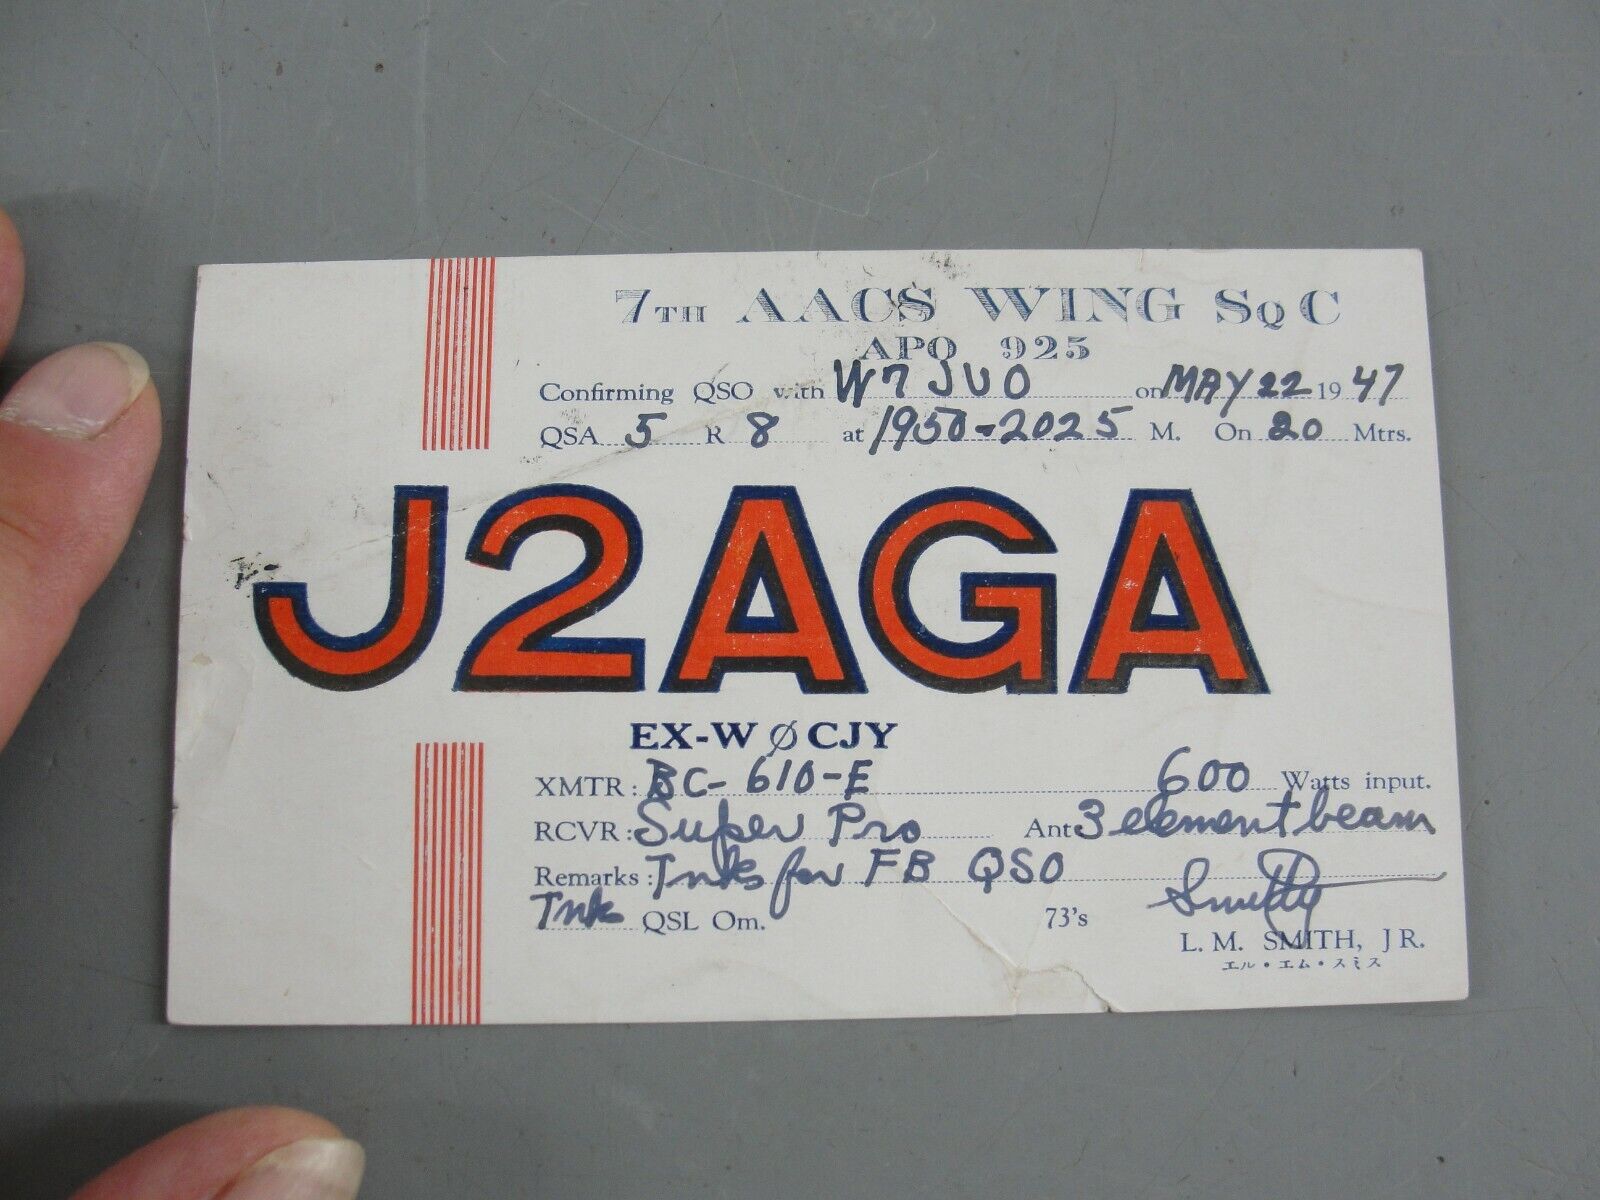 AMATEUR HAM CB RADIO QSL CONTACT Q CARD 7th AACS ARMY AIR FORCE WING Sq C 1947